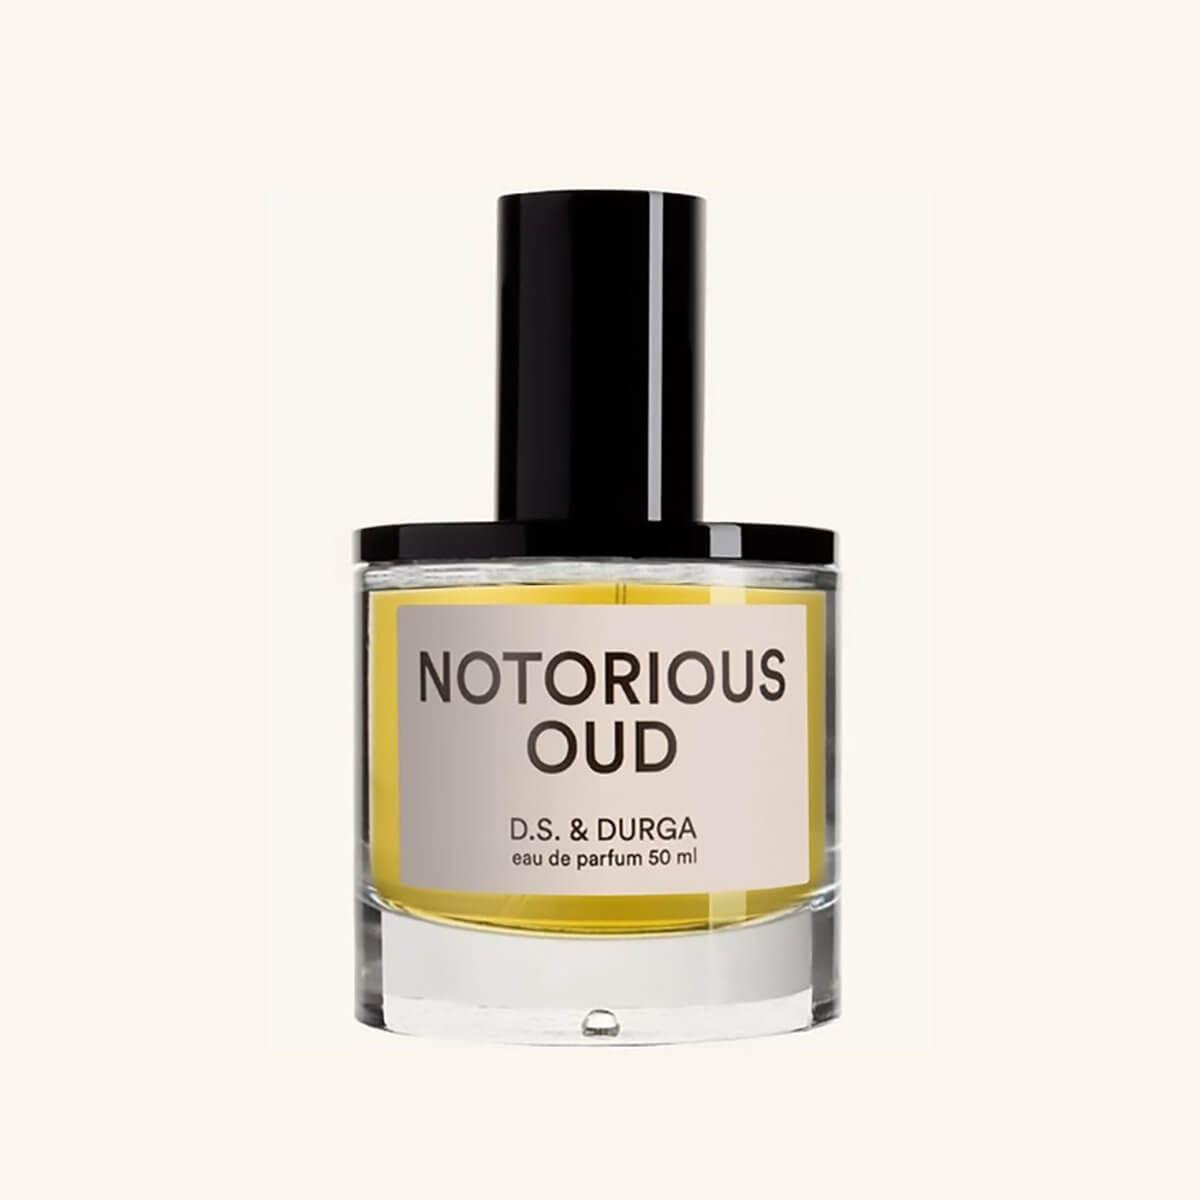 Notorious Oud by D.S. & Durga at Indigo Perfumery